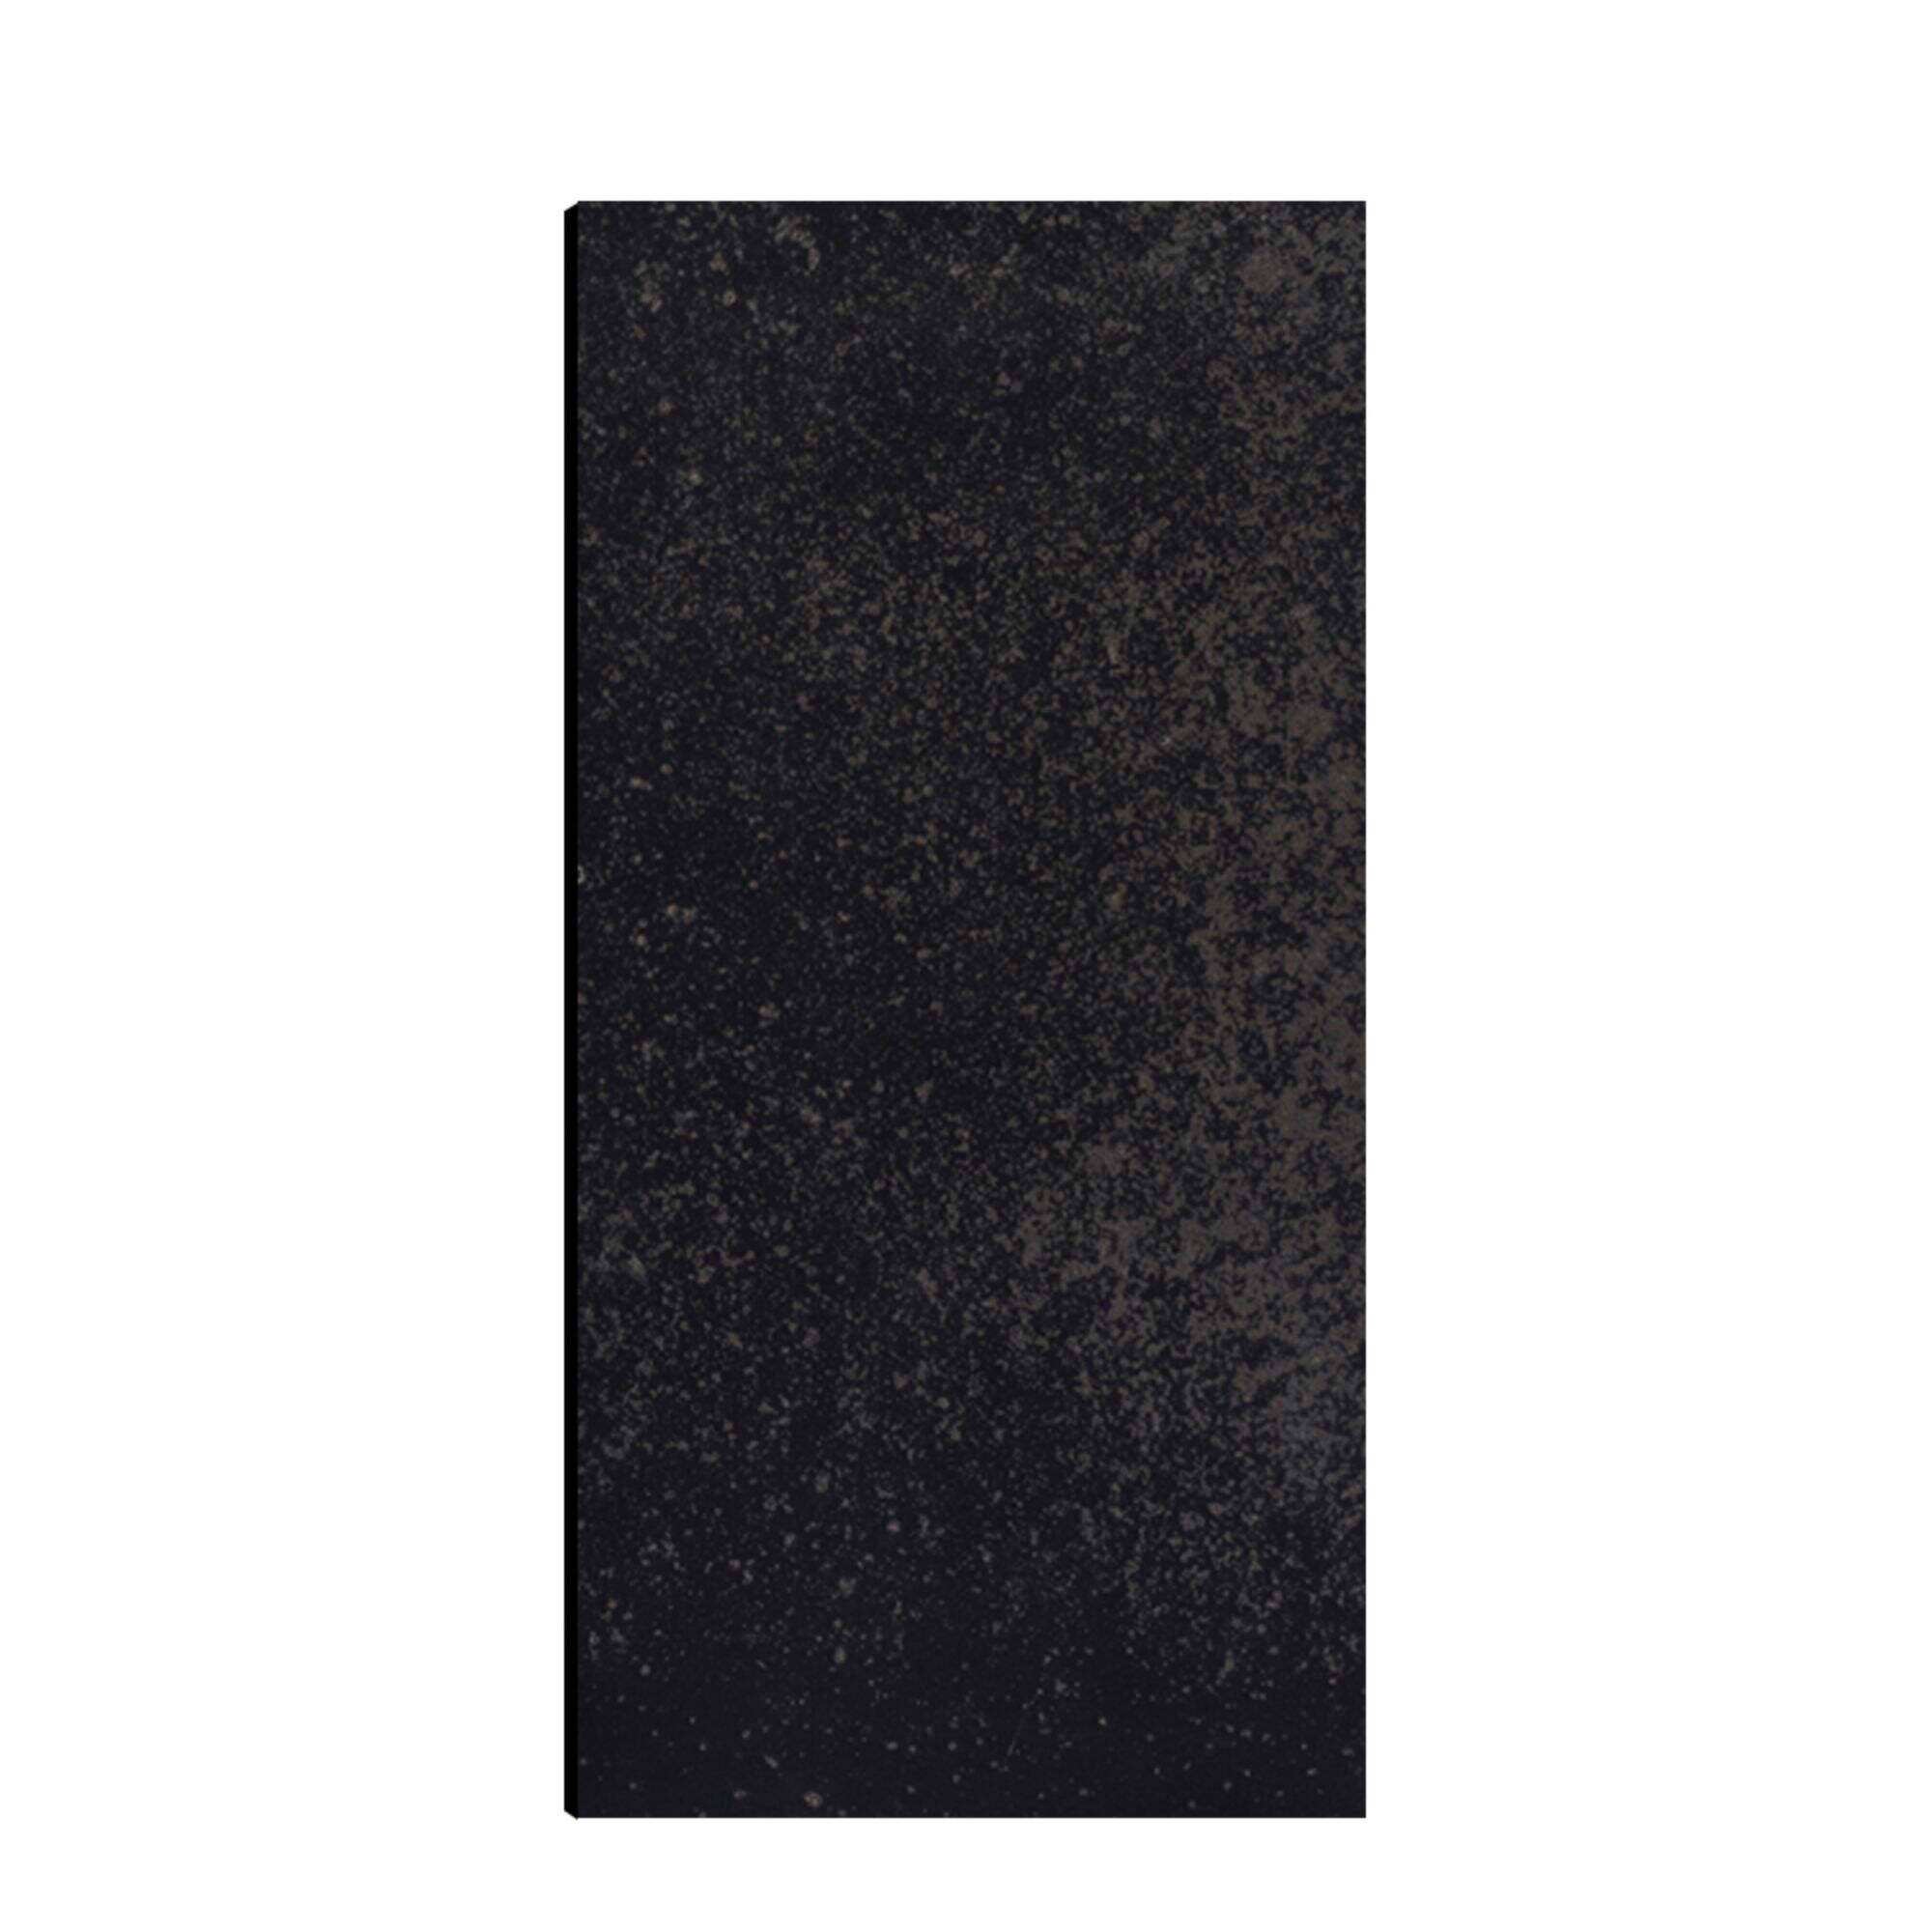 Abyssal Black Gilt Sandstone Cement Board